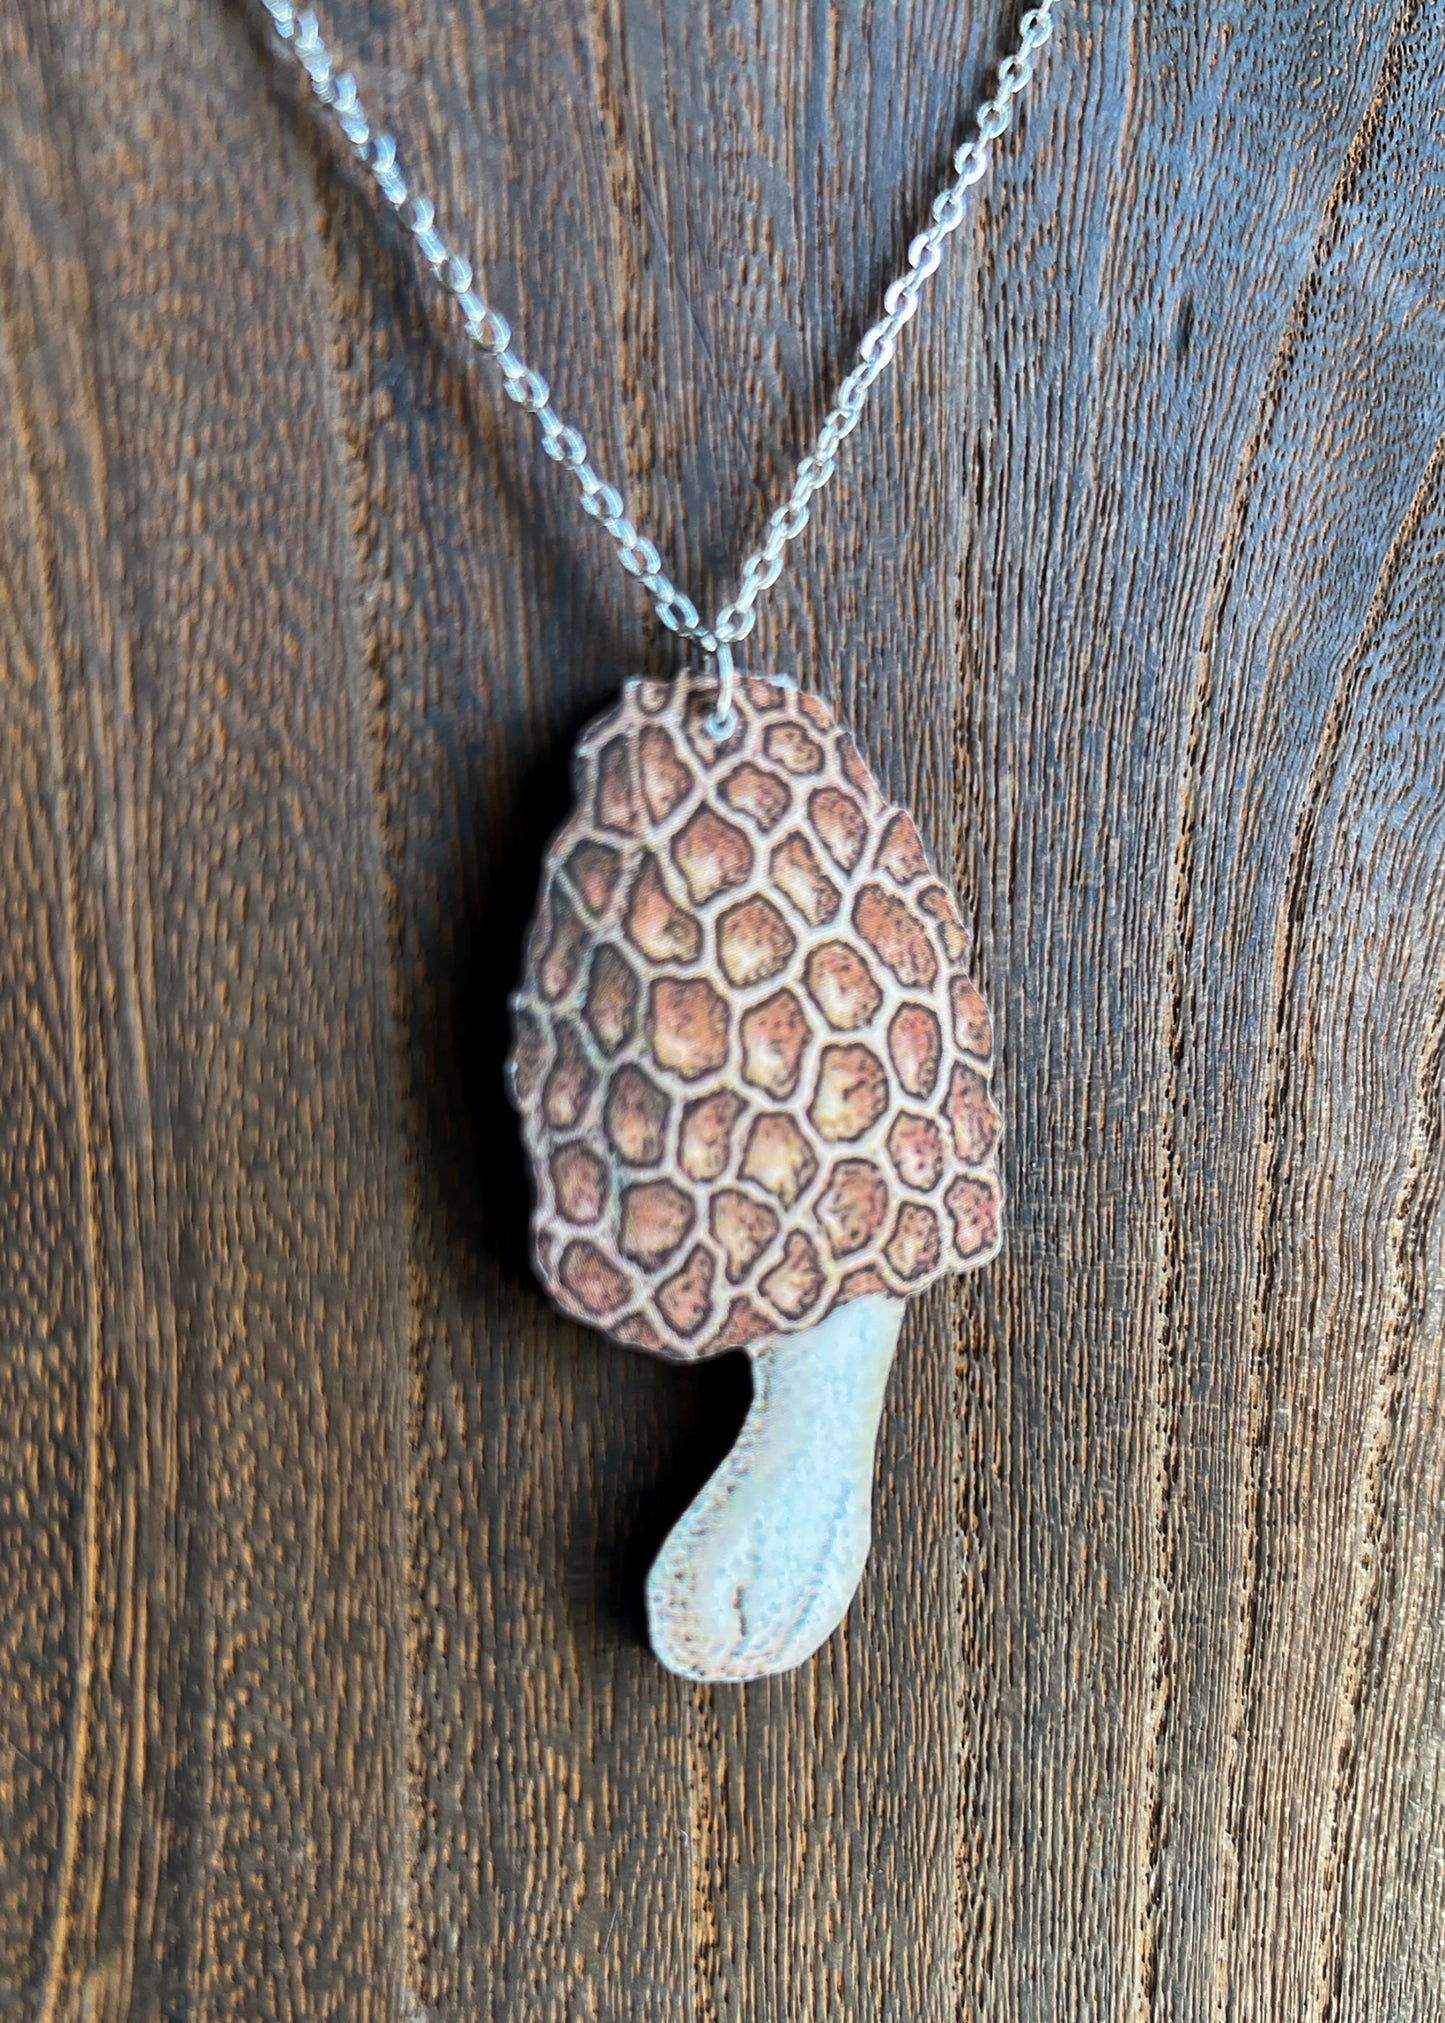 Morel Mushroom Pendant | Fungi Plant Necklace | Fantasy Cottagecore Mushroomcore Fairycore Jewelry | Wooden Lightweight Collarbone Charm